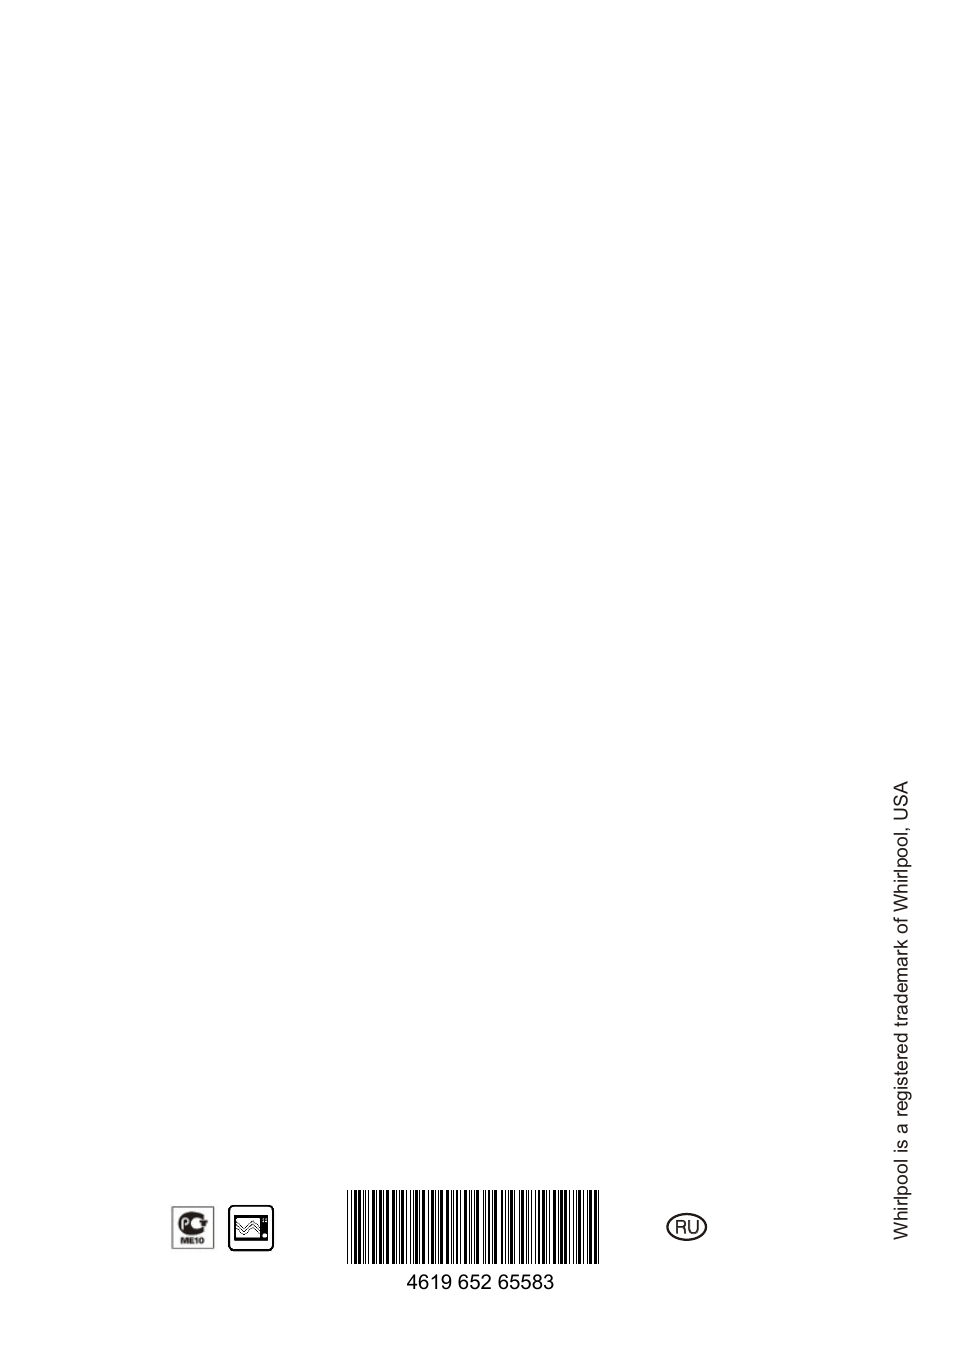 Whirlpool MAX 18 Manual del usuario | Página 13 / 13